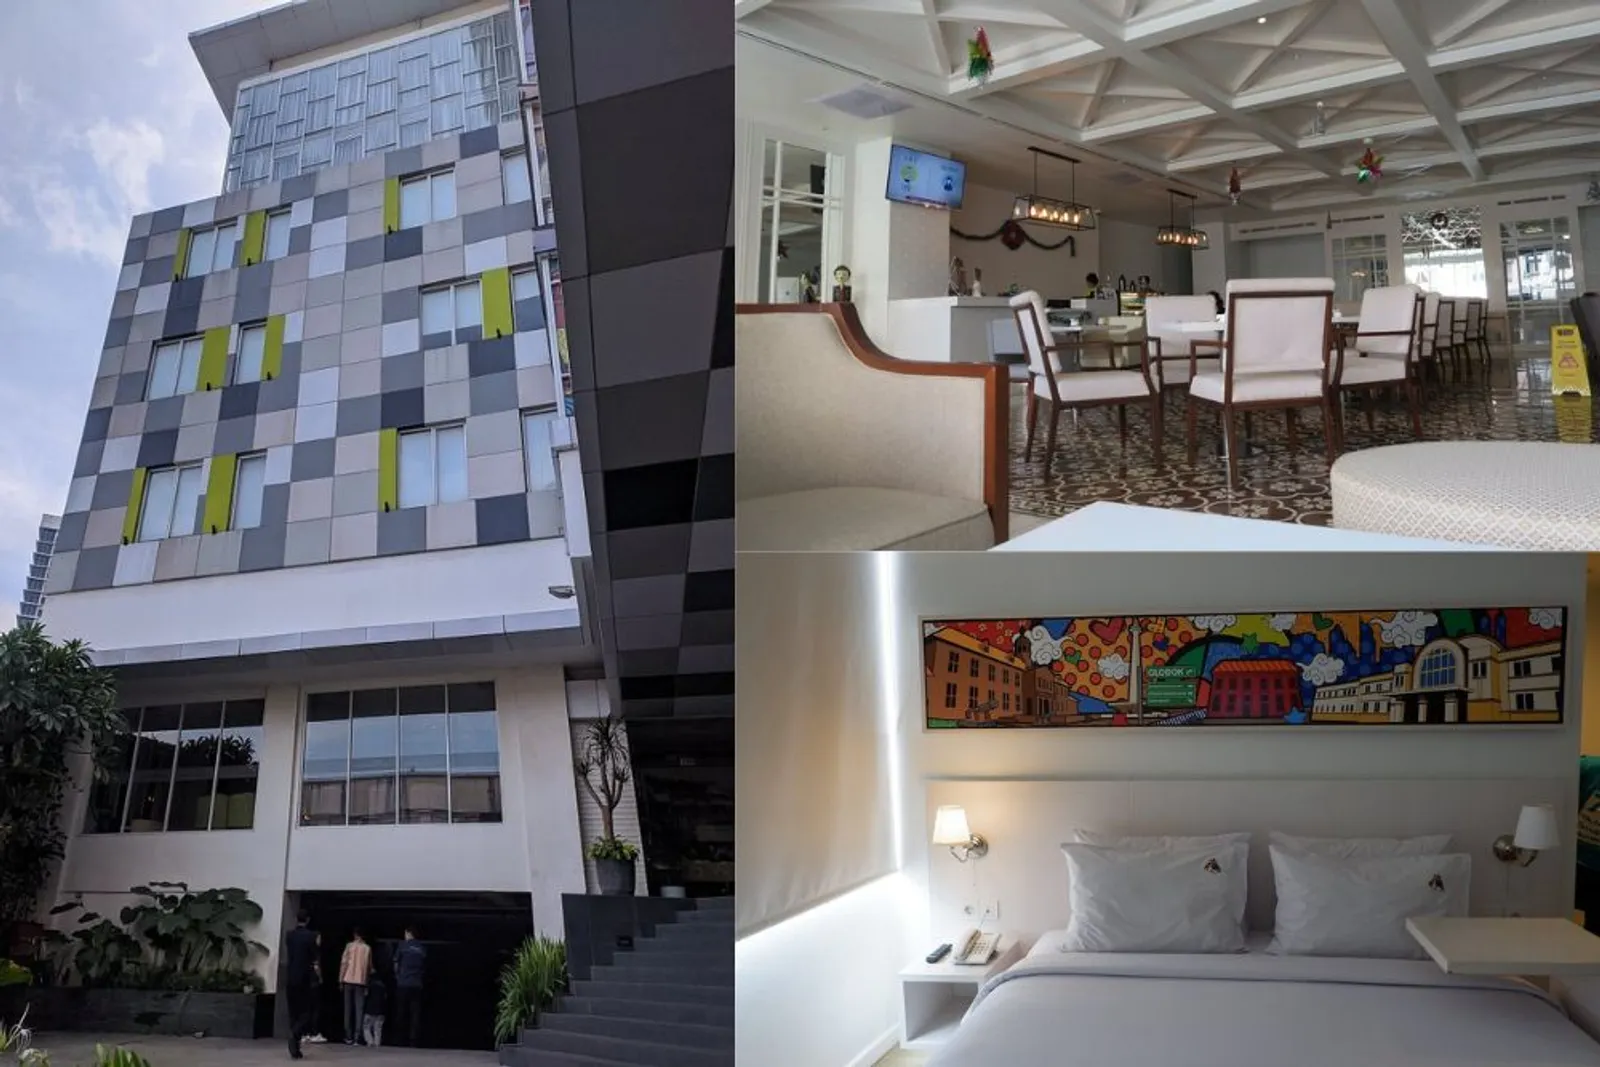 9 Rekomendasi Hotel Murah Jakarta Barat, di Bawah Rp500 Ribu